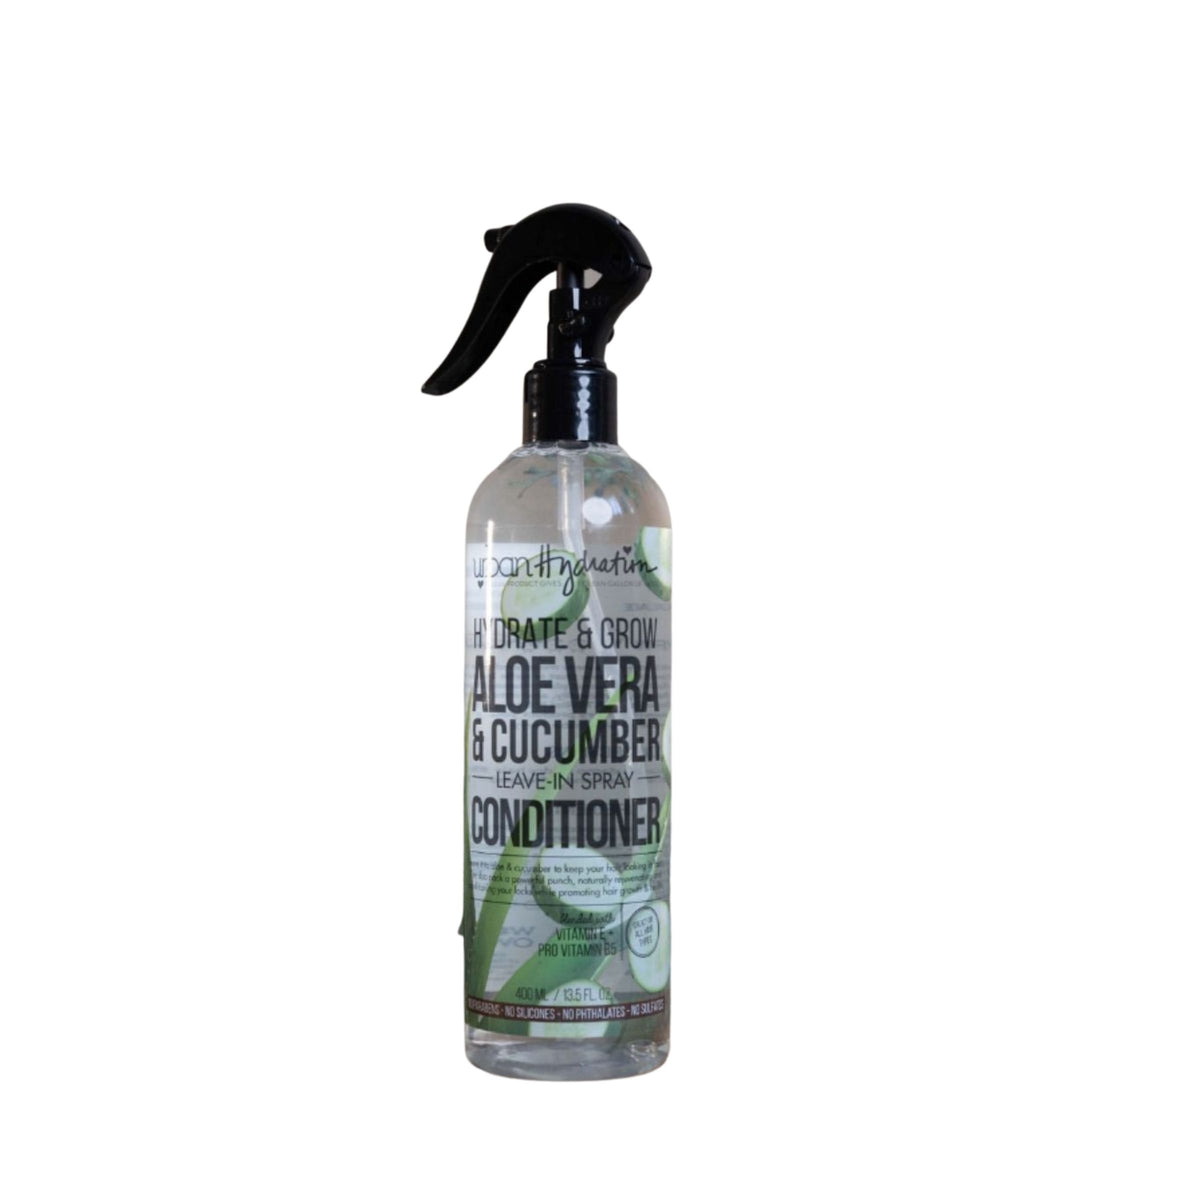 & Grow Aloe Vera & Cucumber Leave-in Spray Conditioner – Urban Hydration